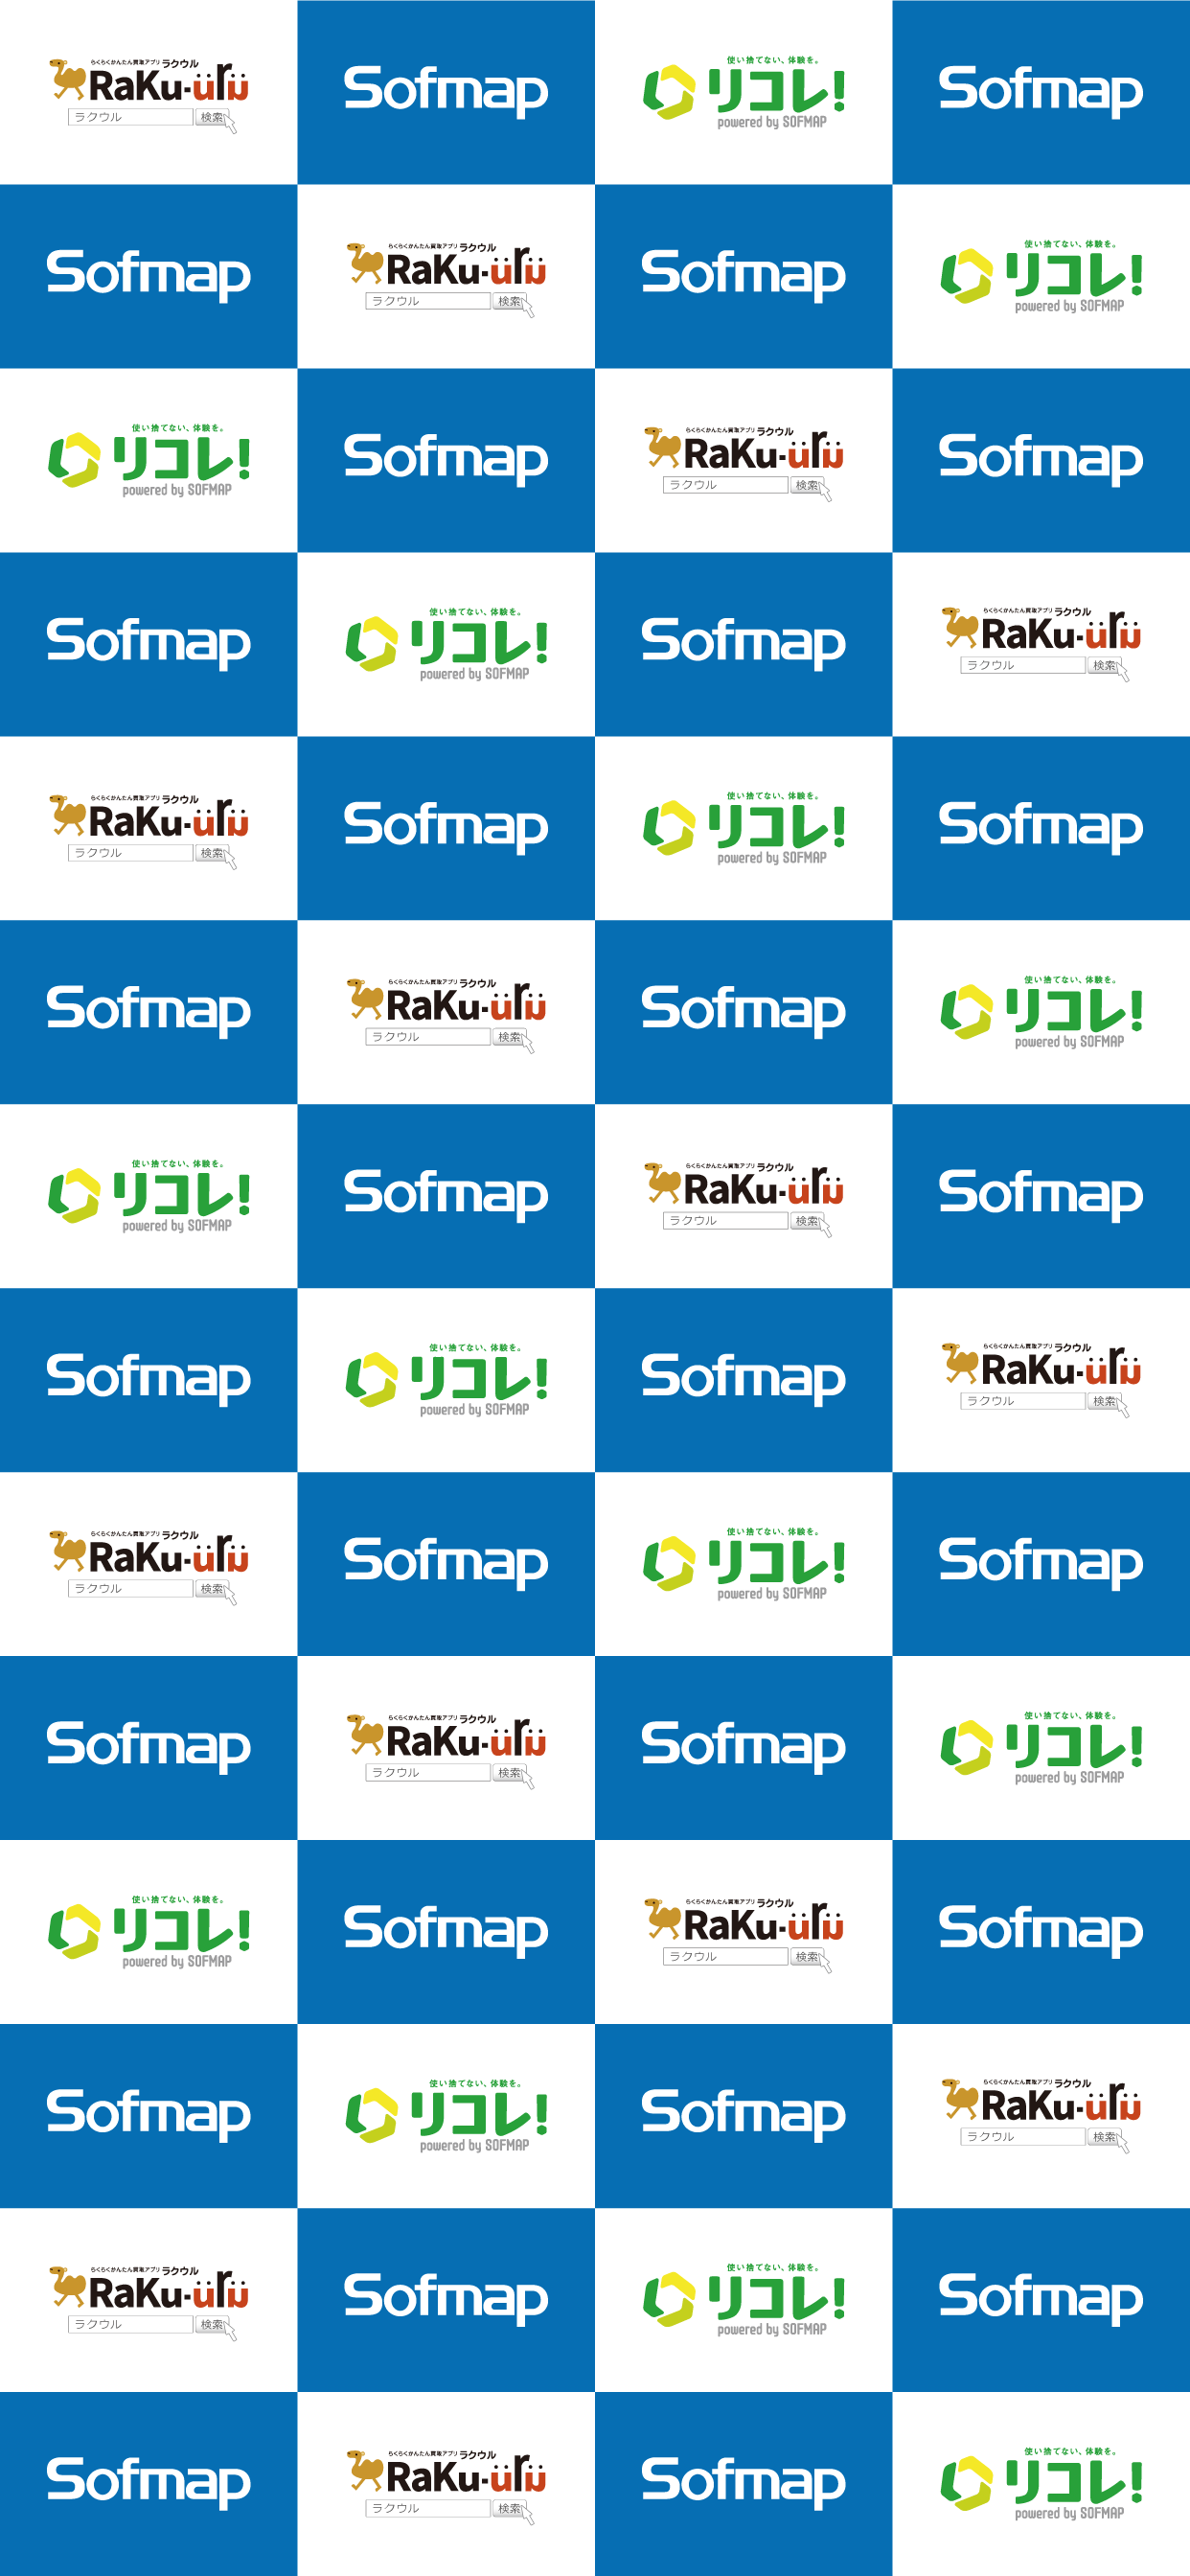 Web会議などで使える ソフマップ壁紙 例の壁 登場 ソフマップ Sofmap